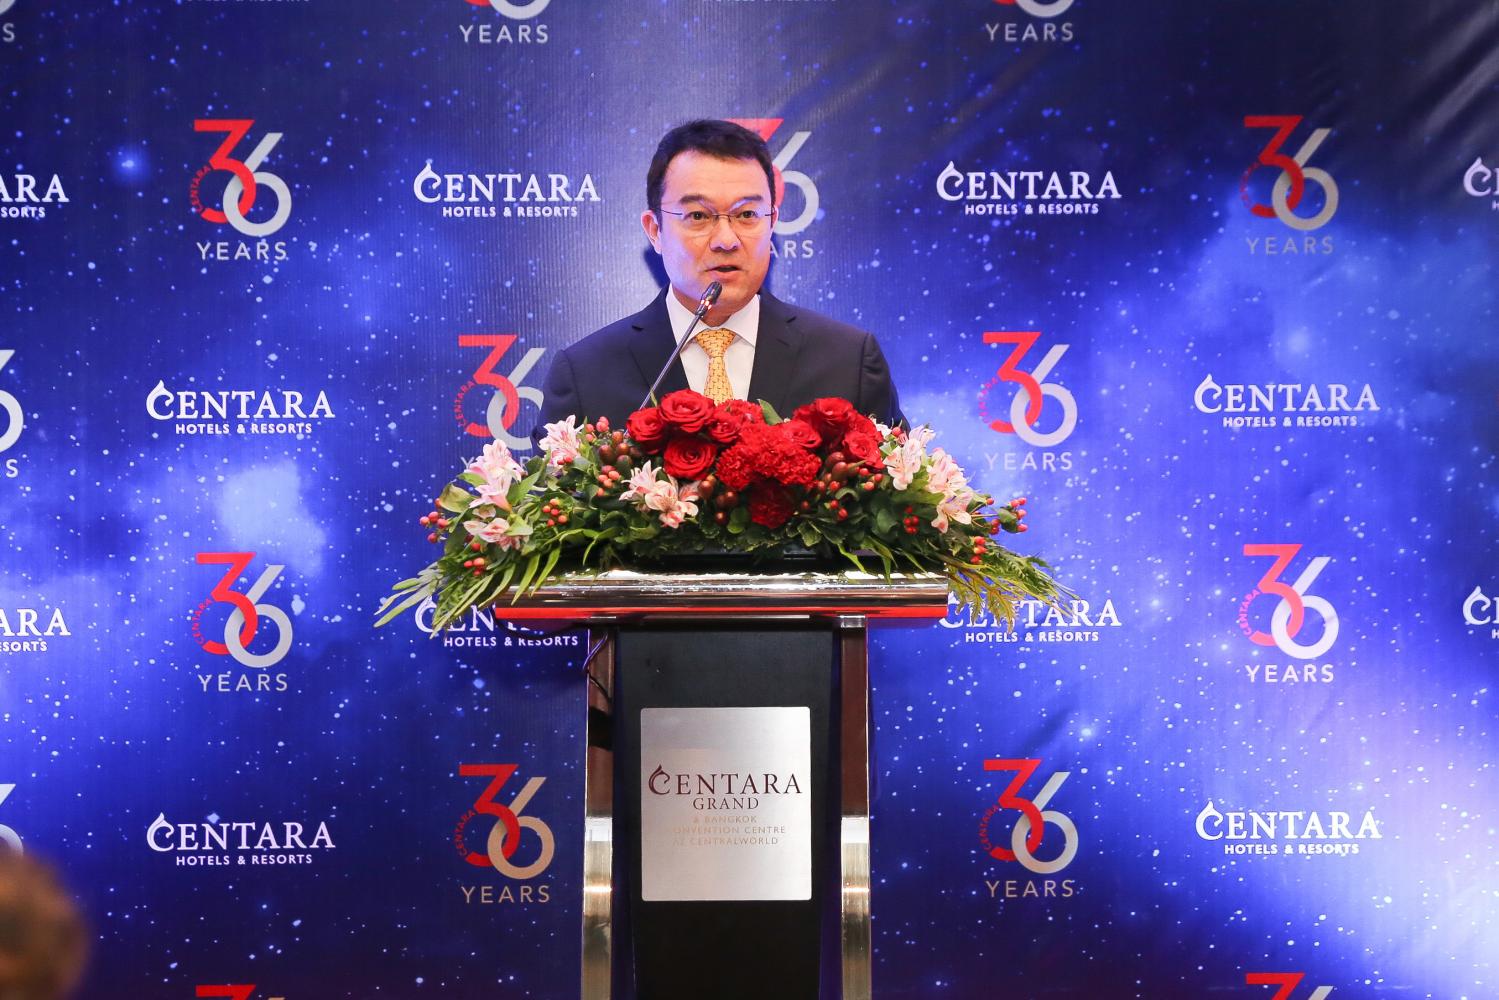 Centara plans for 134 hotels